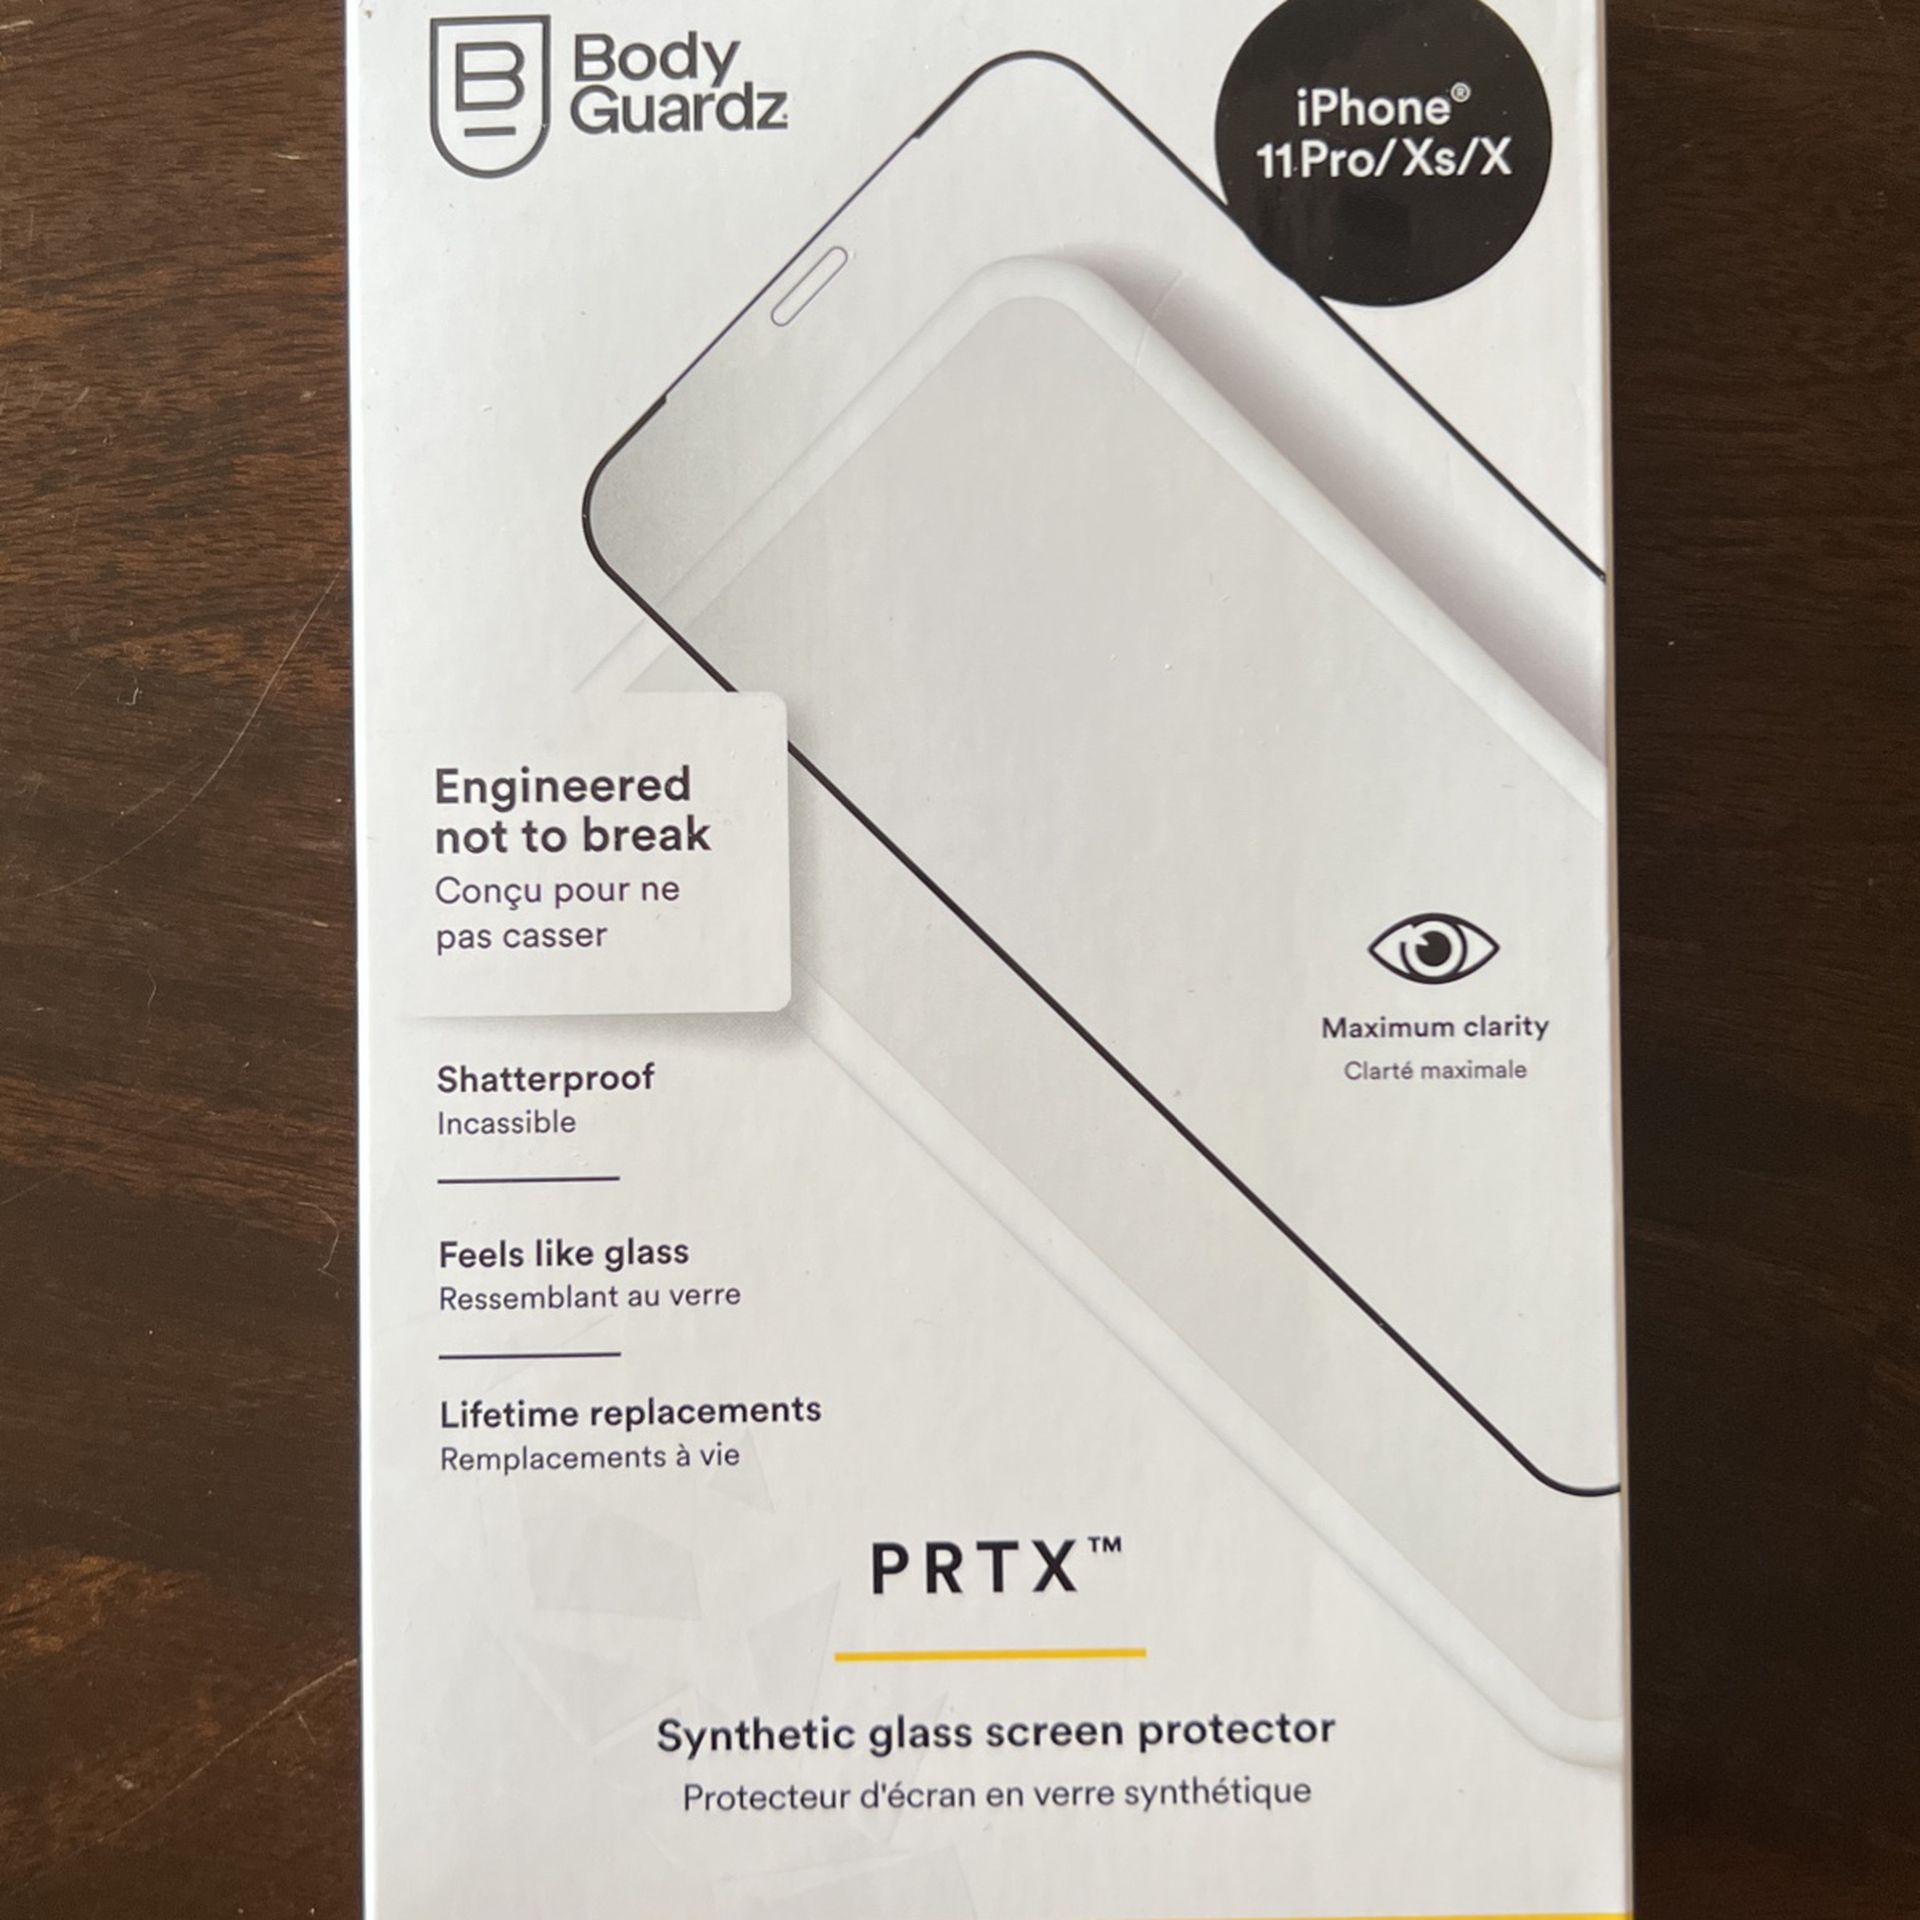 BodyGuardz iPhone 11 Pro/Xs/X Synthetic Glass Screen Protector (PRTX)